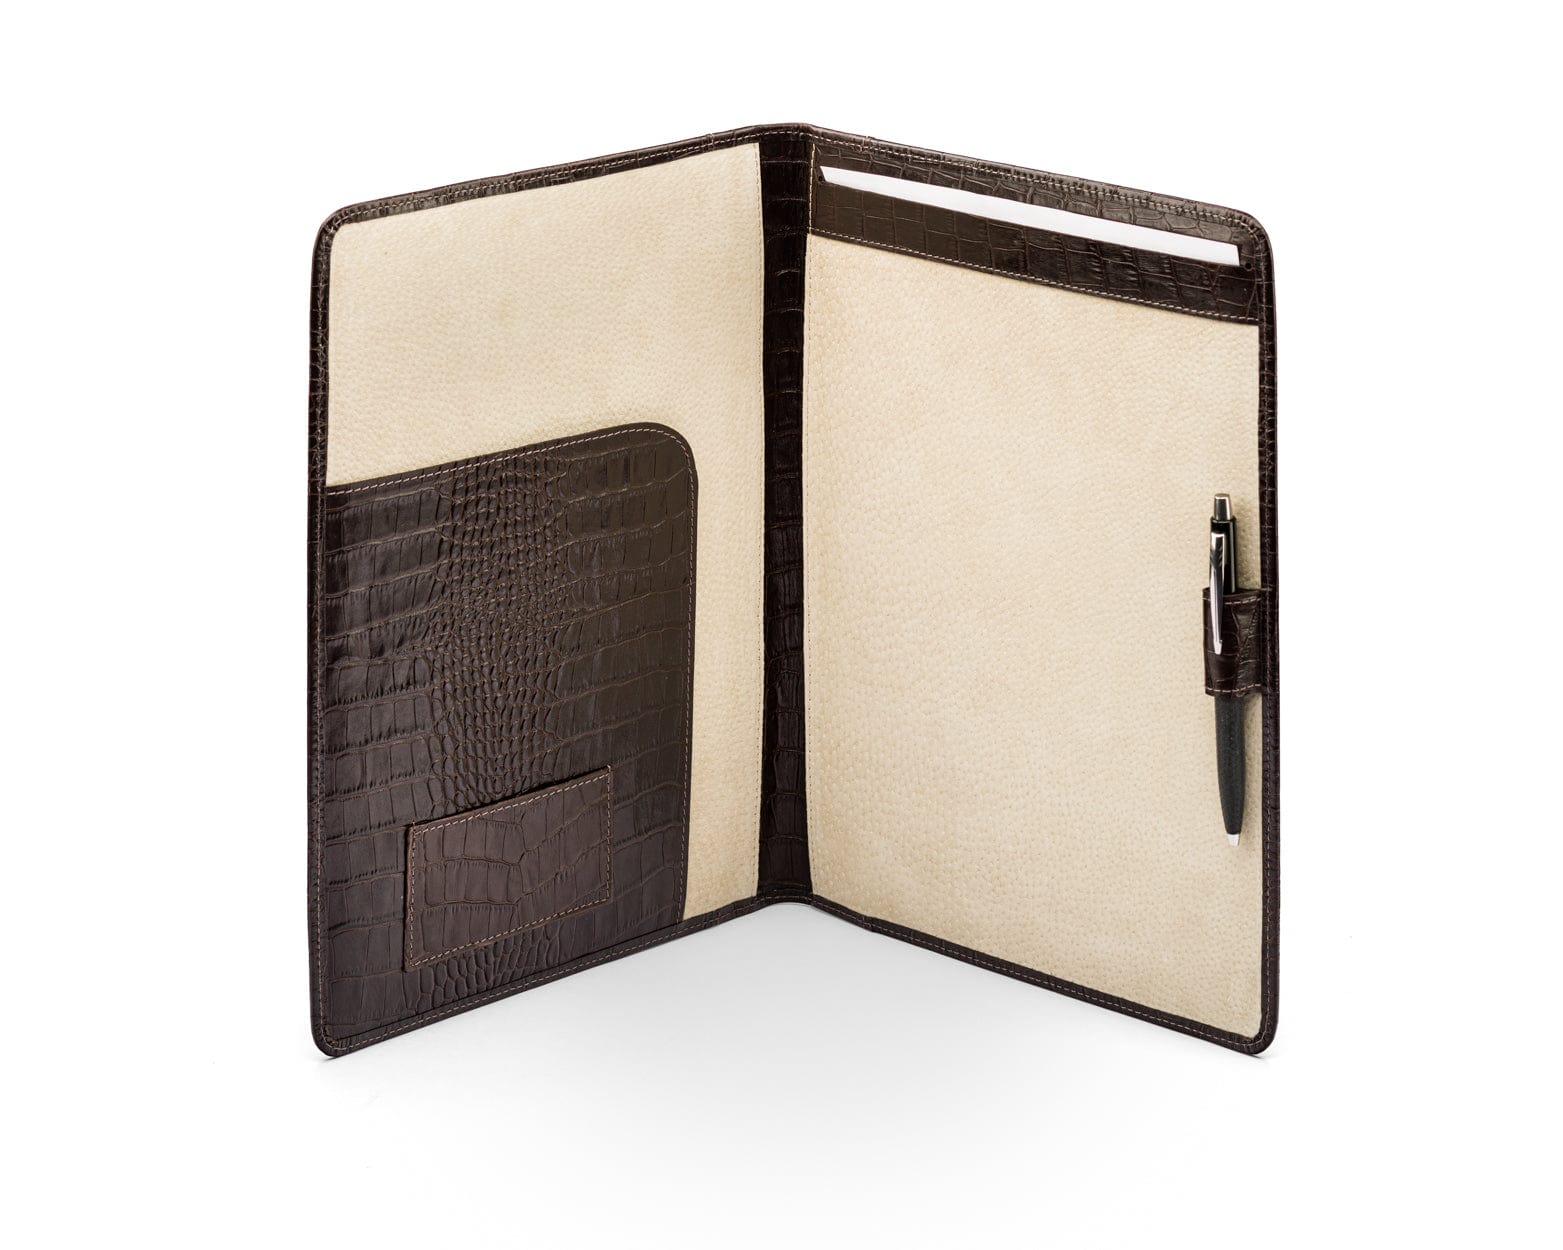 A4 leather document folder, brown croc, inside